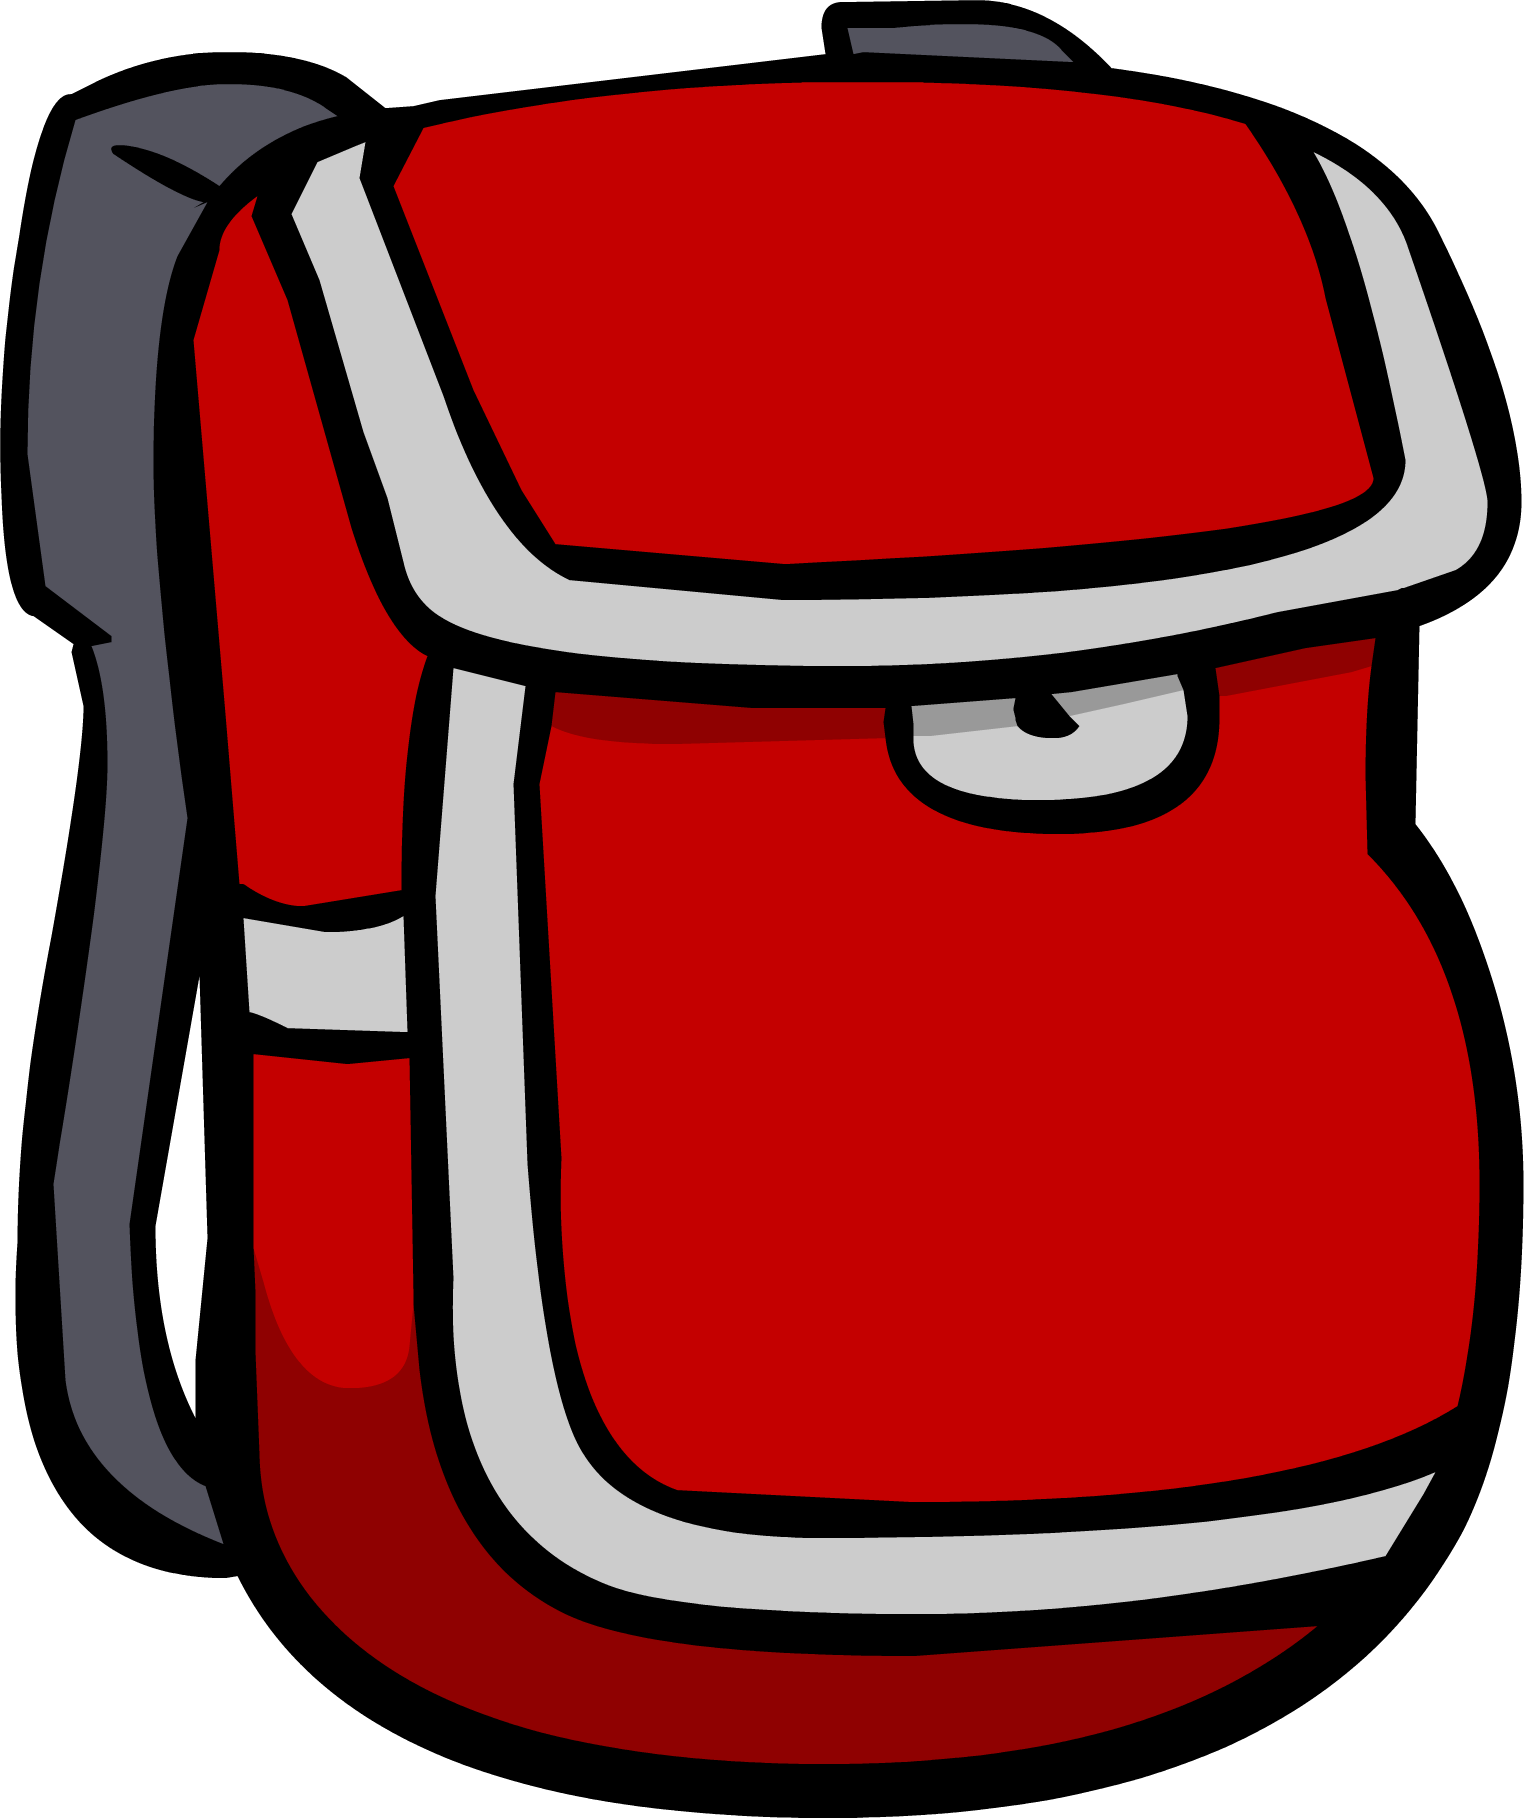 Bookbag clipart red, Bookbag red Transparent FREE for